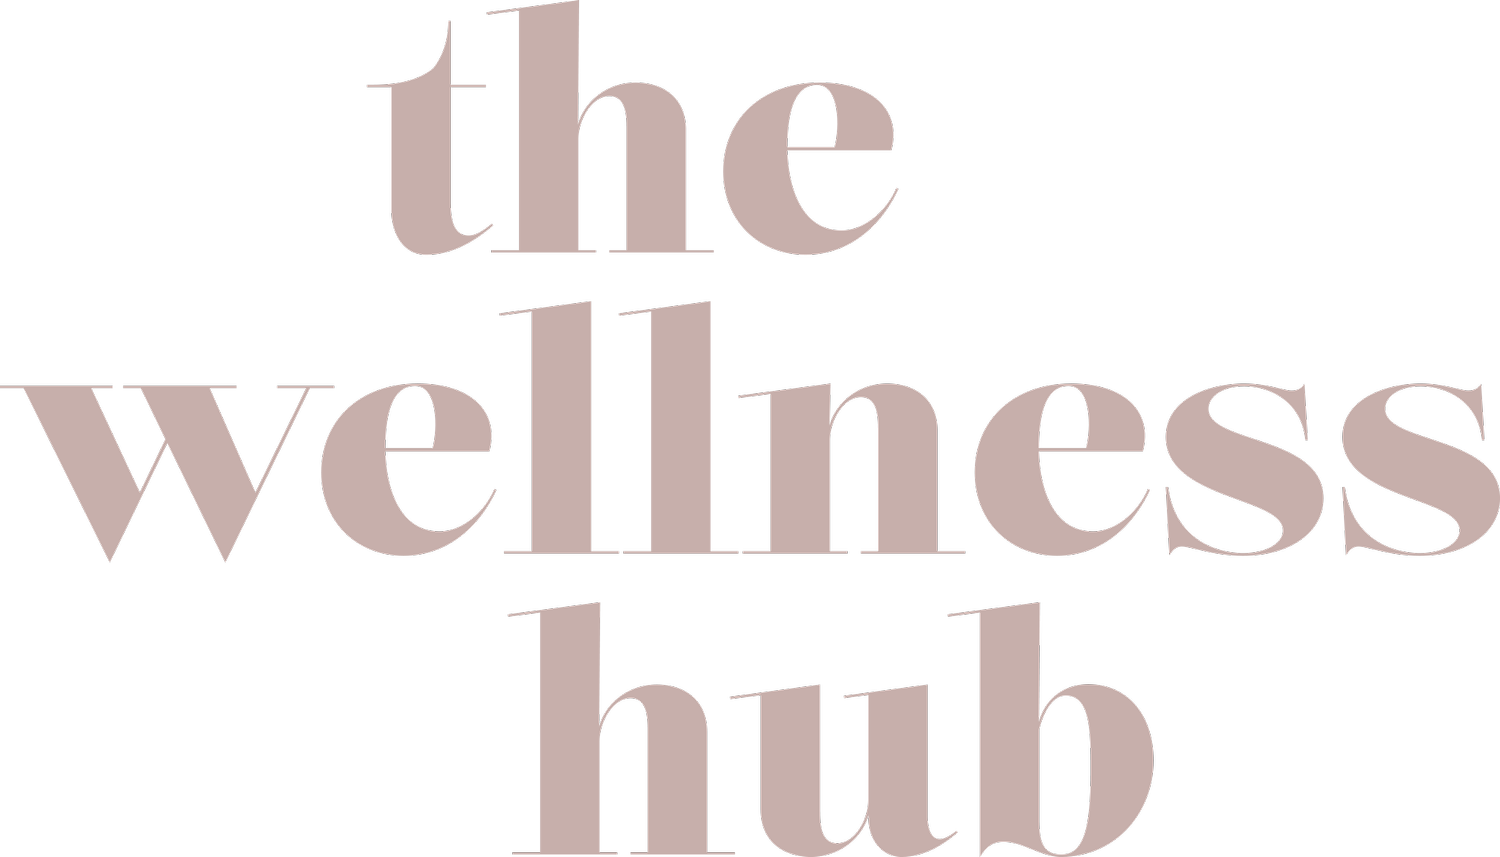 The Wellness Hub